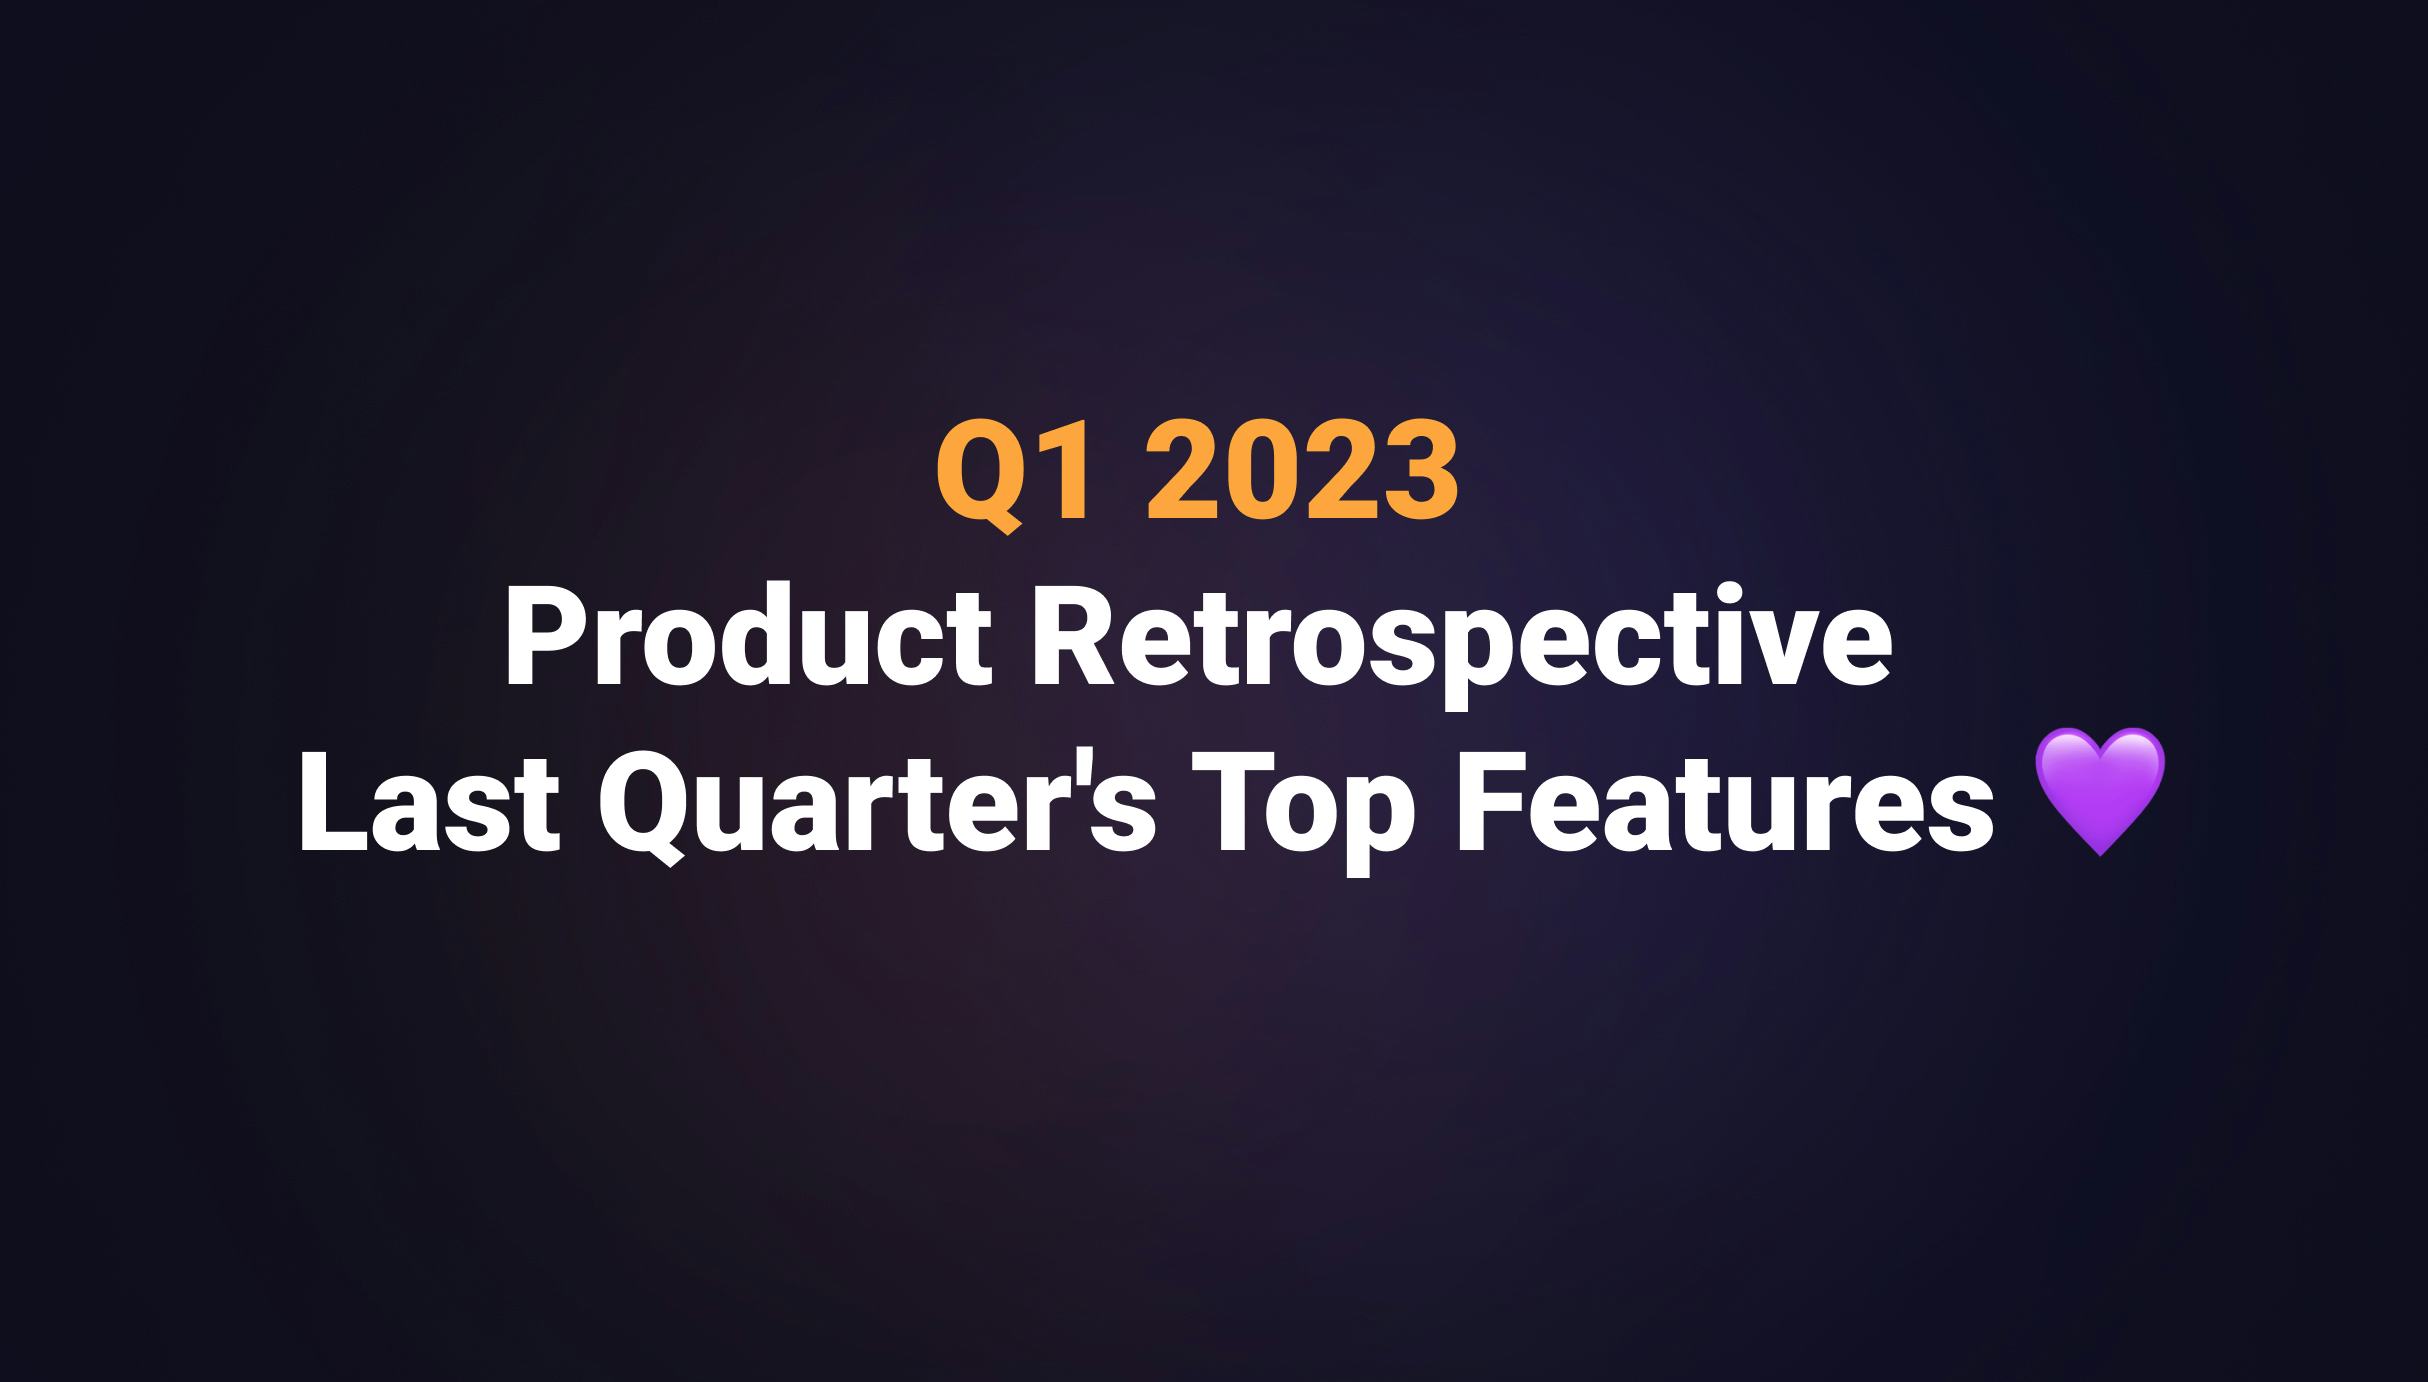 Q1 2023 Product Retrospective - Last Quarter's Top Features